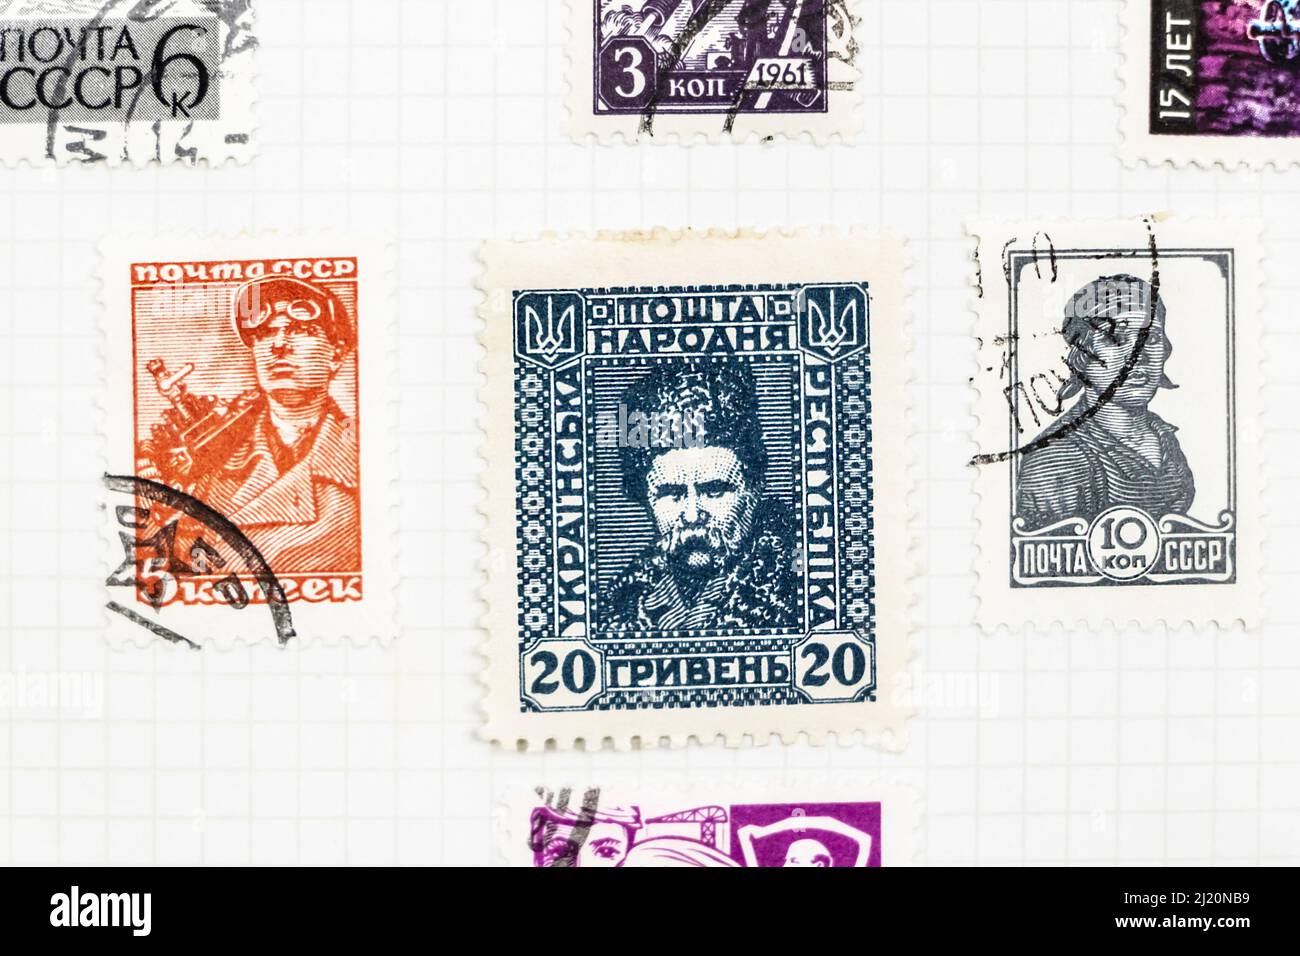 stamp album collection Stock Photo - Alamy